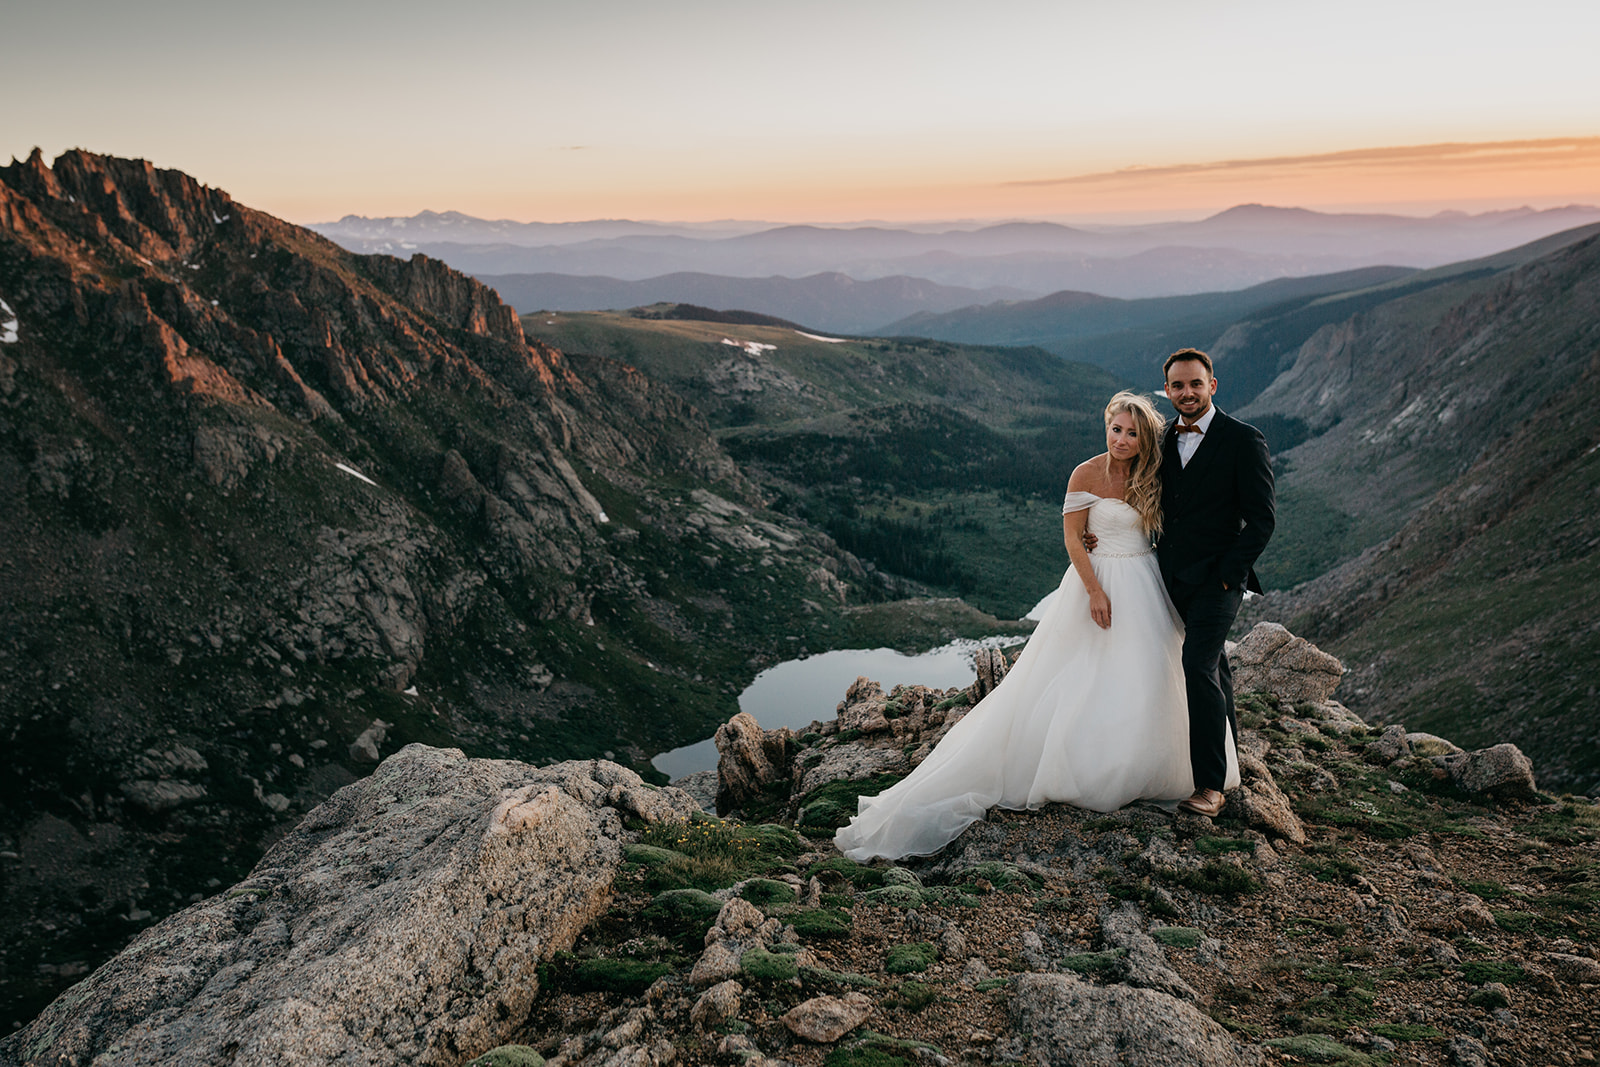 Couple enjoying the sunset during their mountain wedding